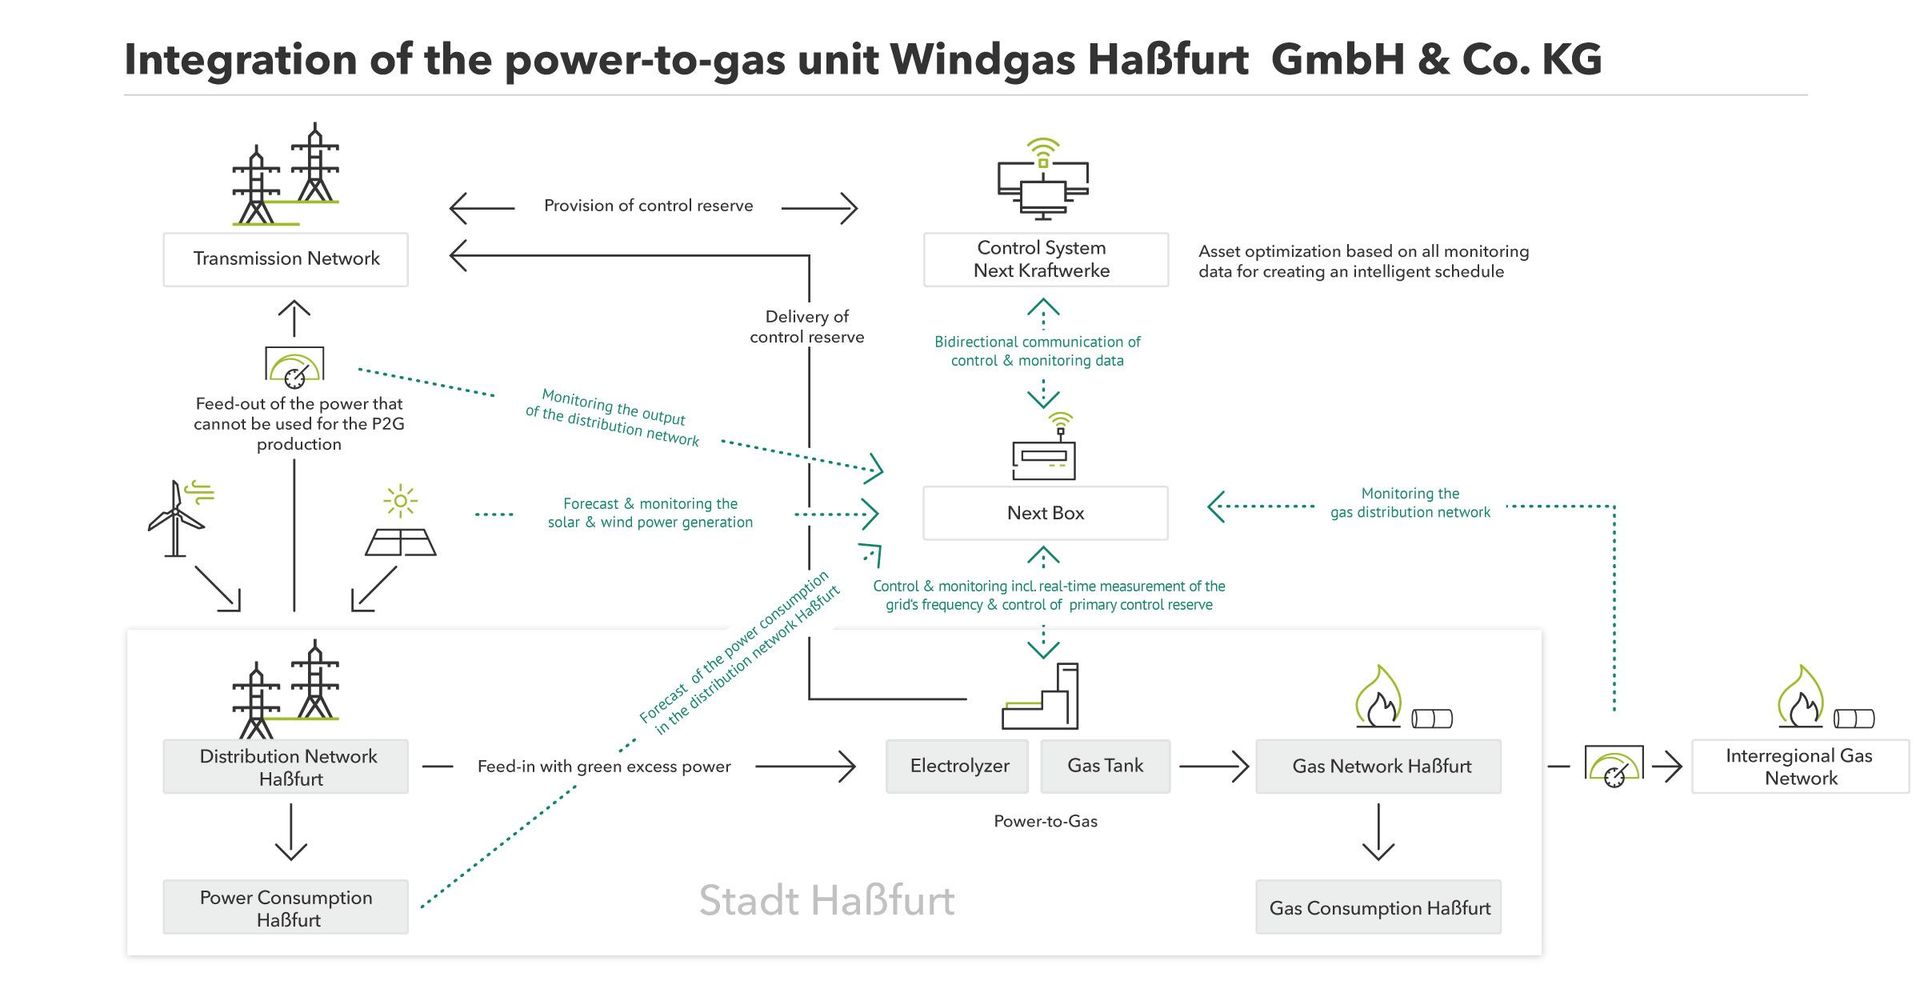 Power to gas plant Hassfurt as part of the VPP of Next Kraftwerke,